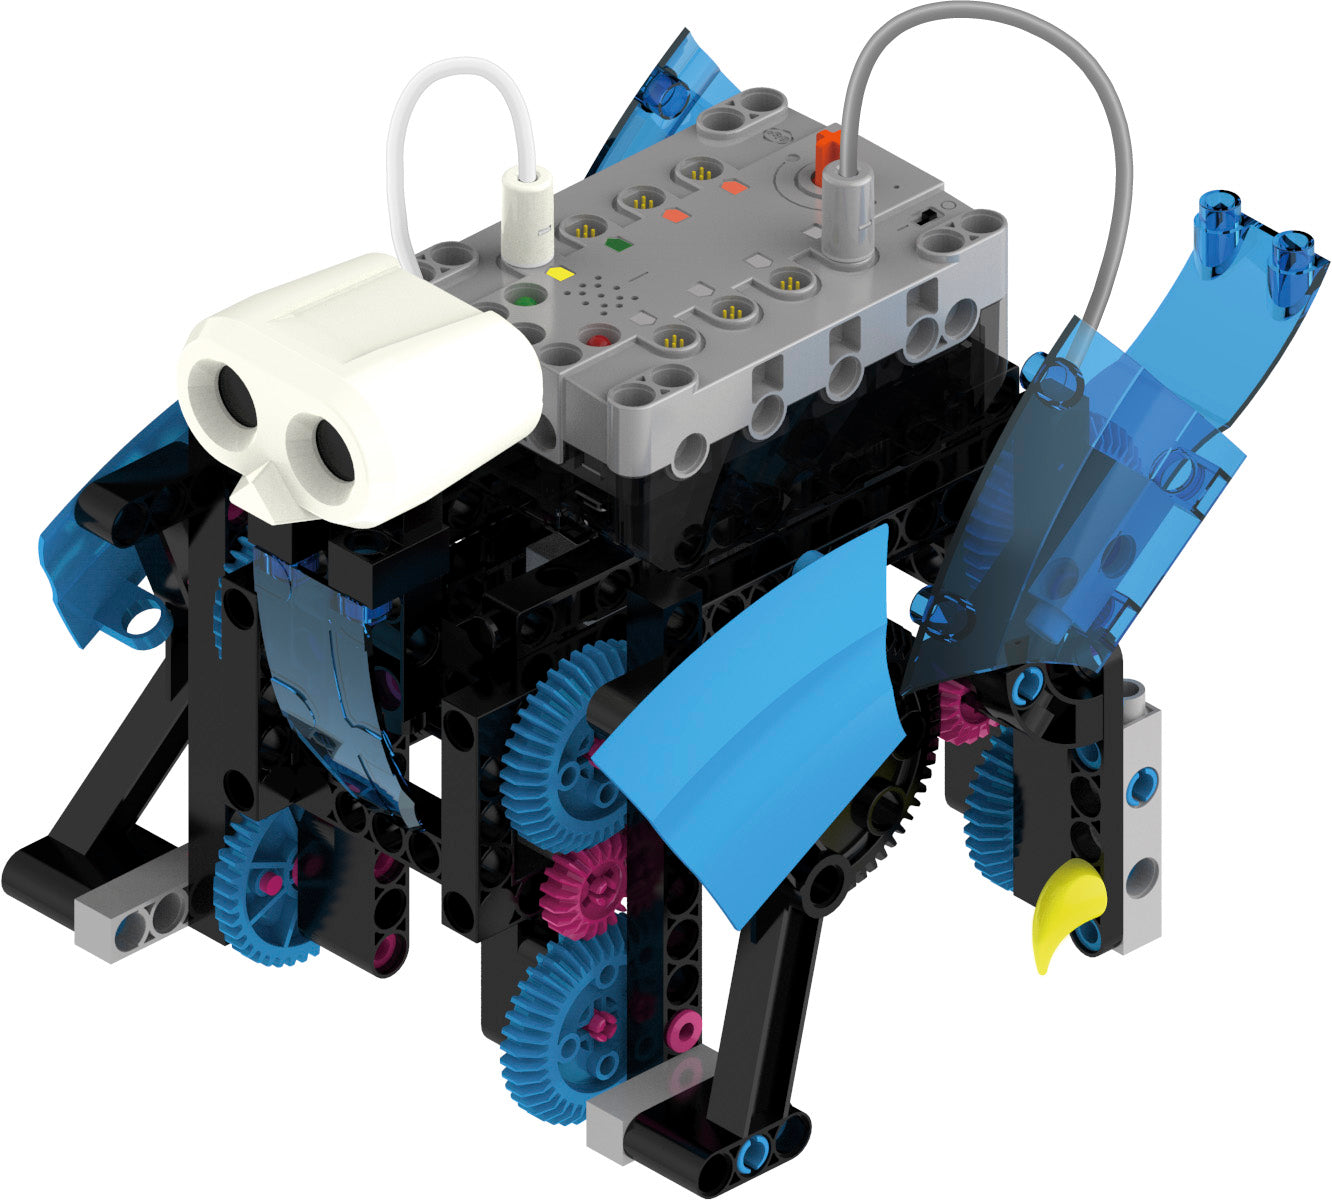 Thames & Kosmos Robotics Workshop Kit